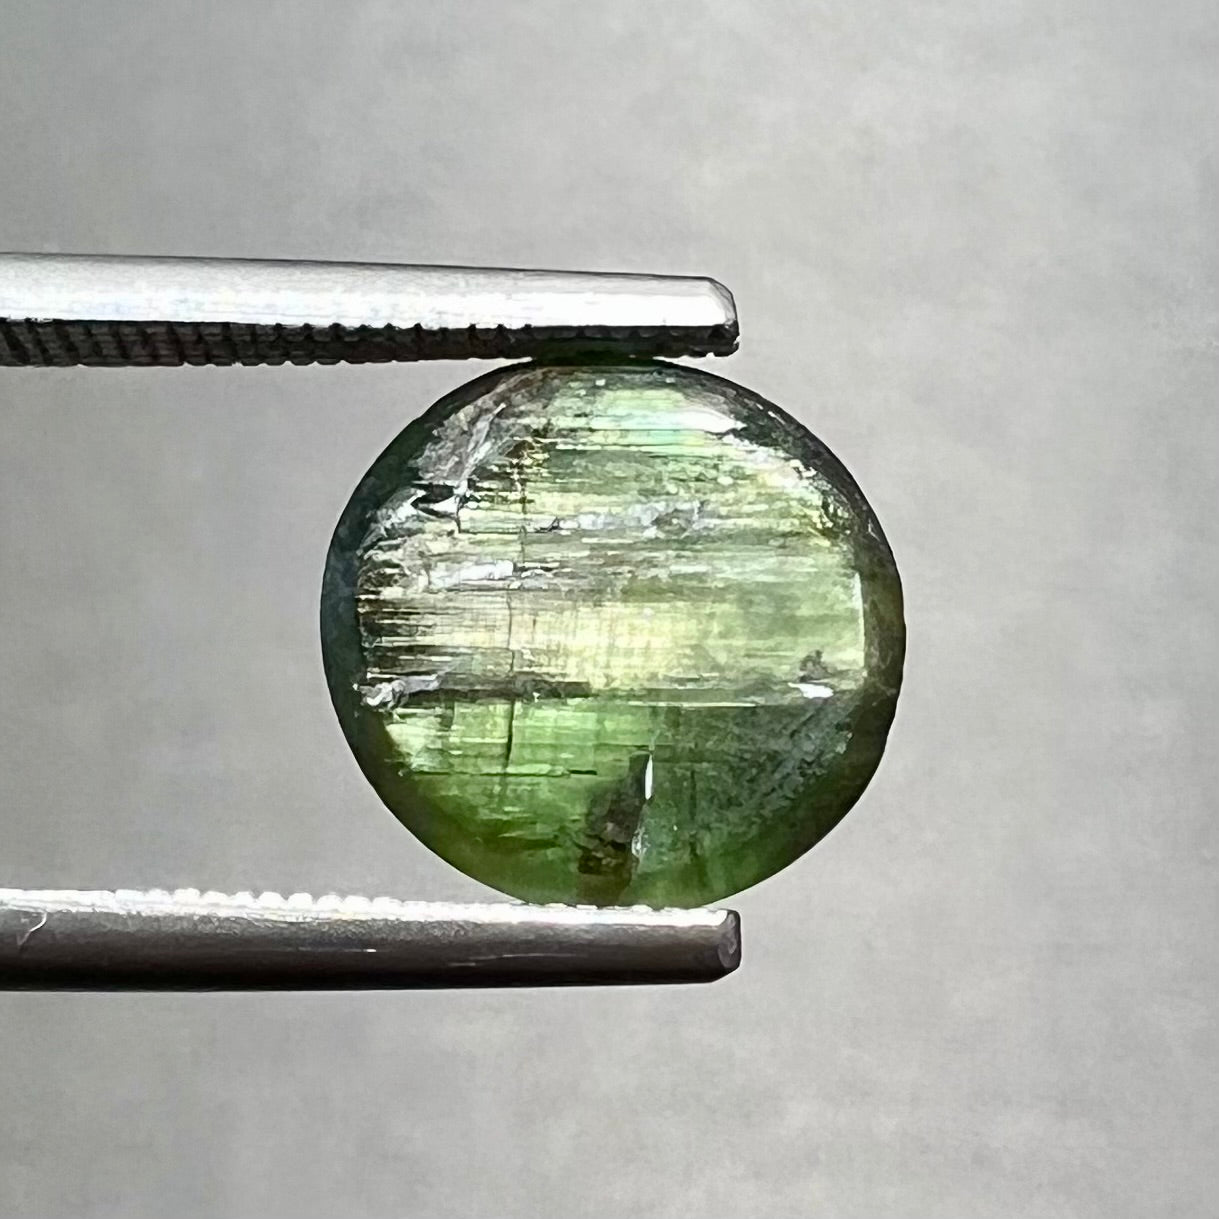 A loose, round cabochon cut green tourmaline stone that displays a cat's eye phenomenon.